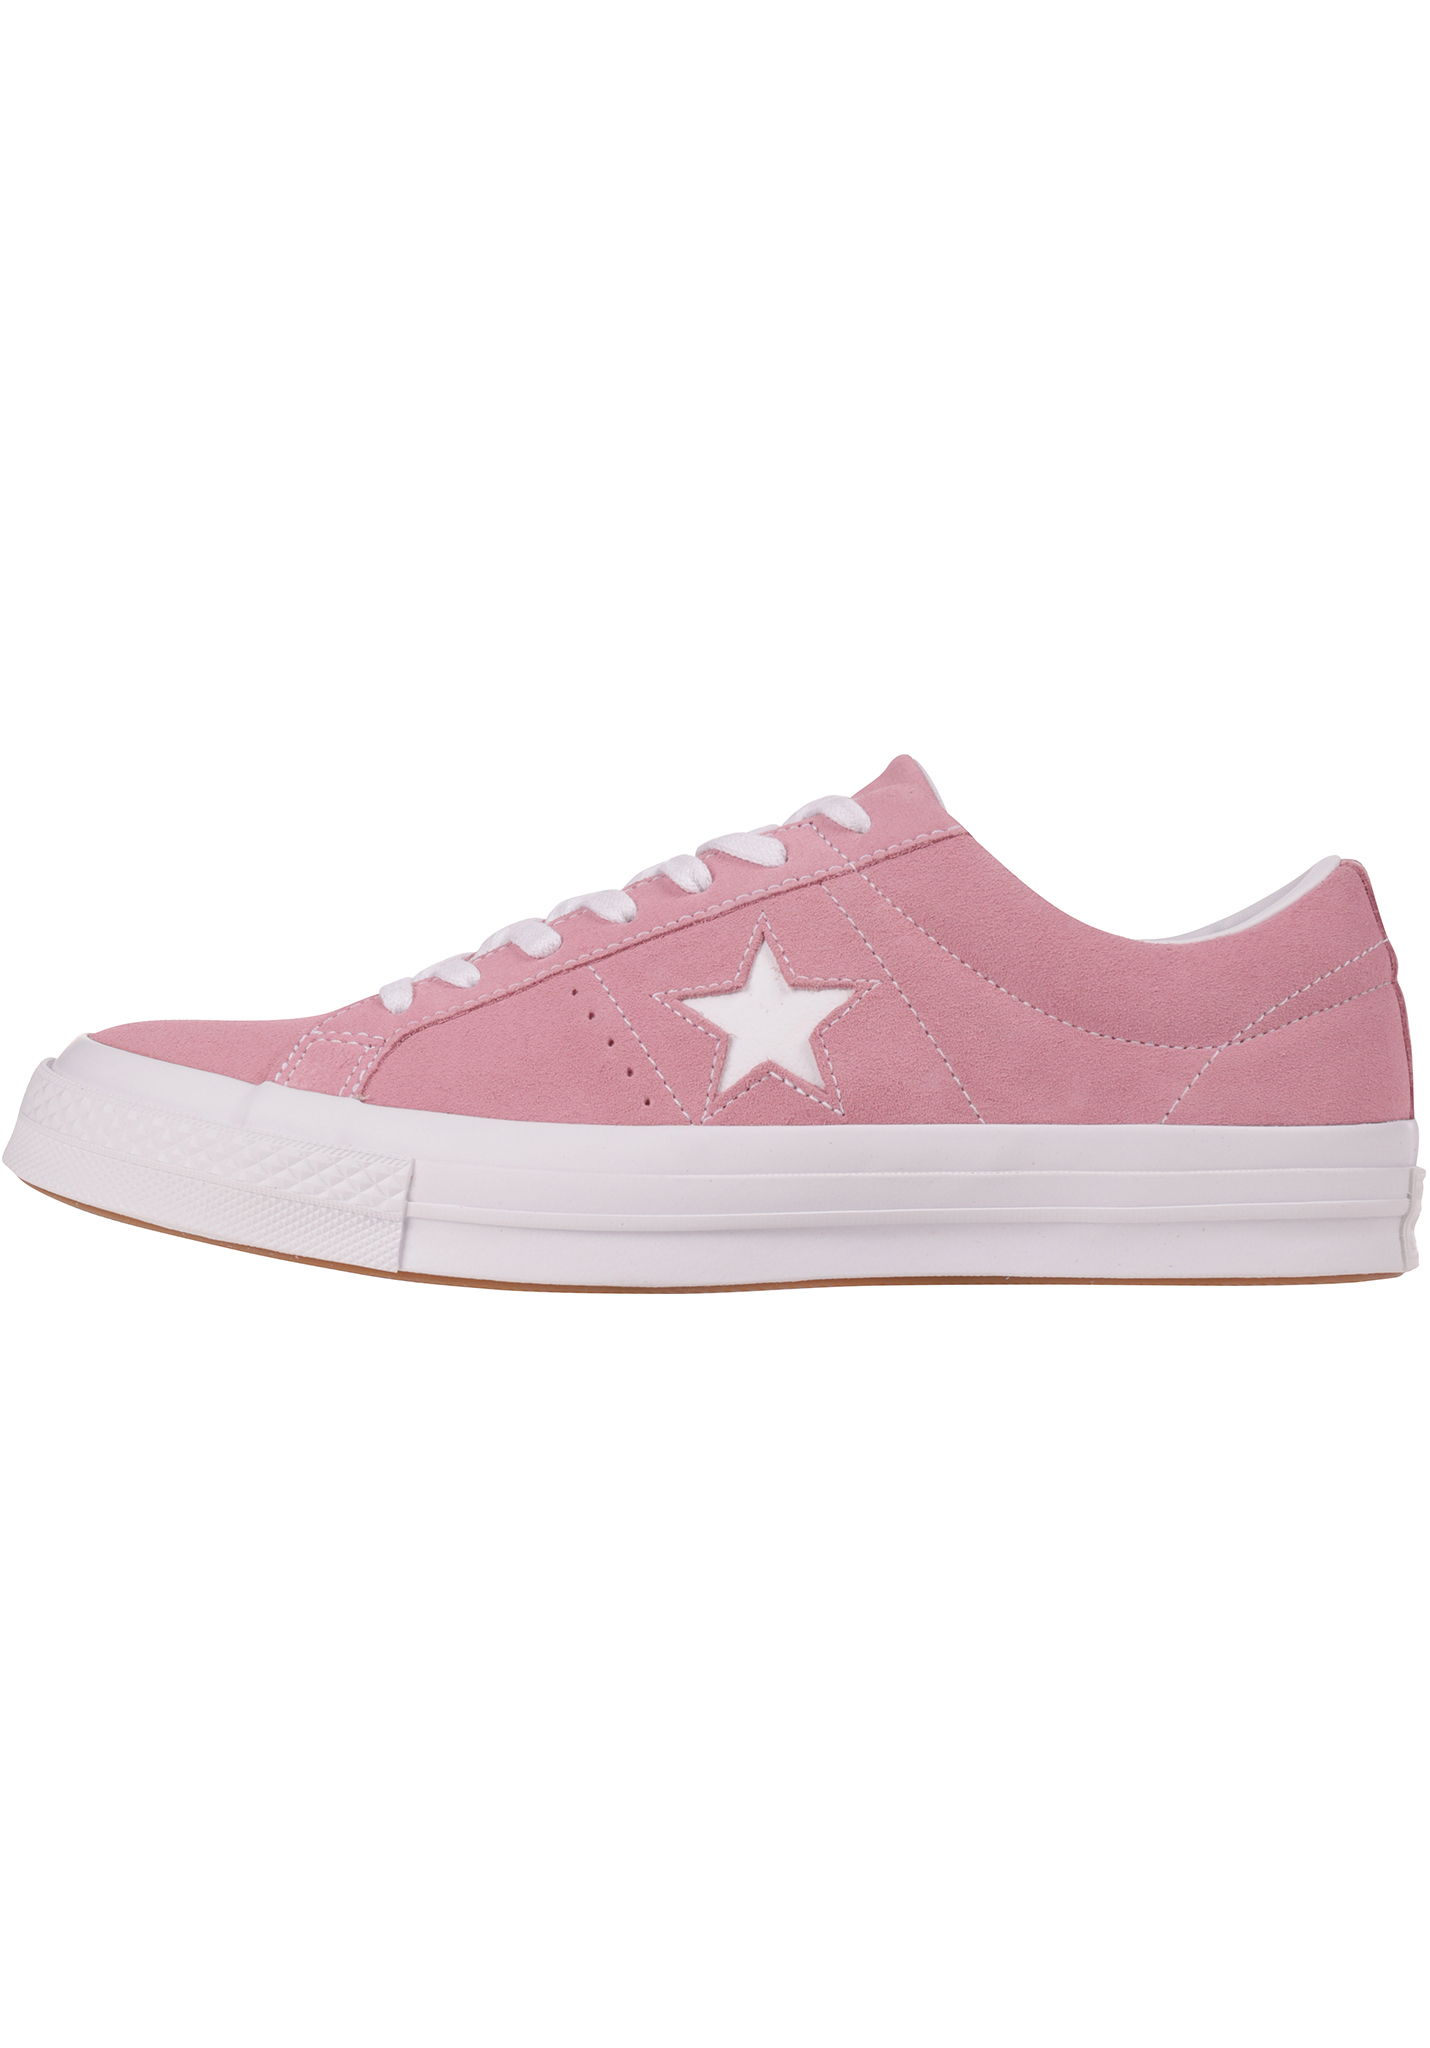 Converse One Star OX Sneaker pink glow/white/white 37